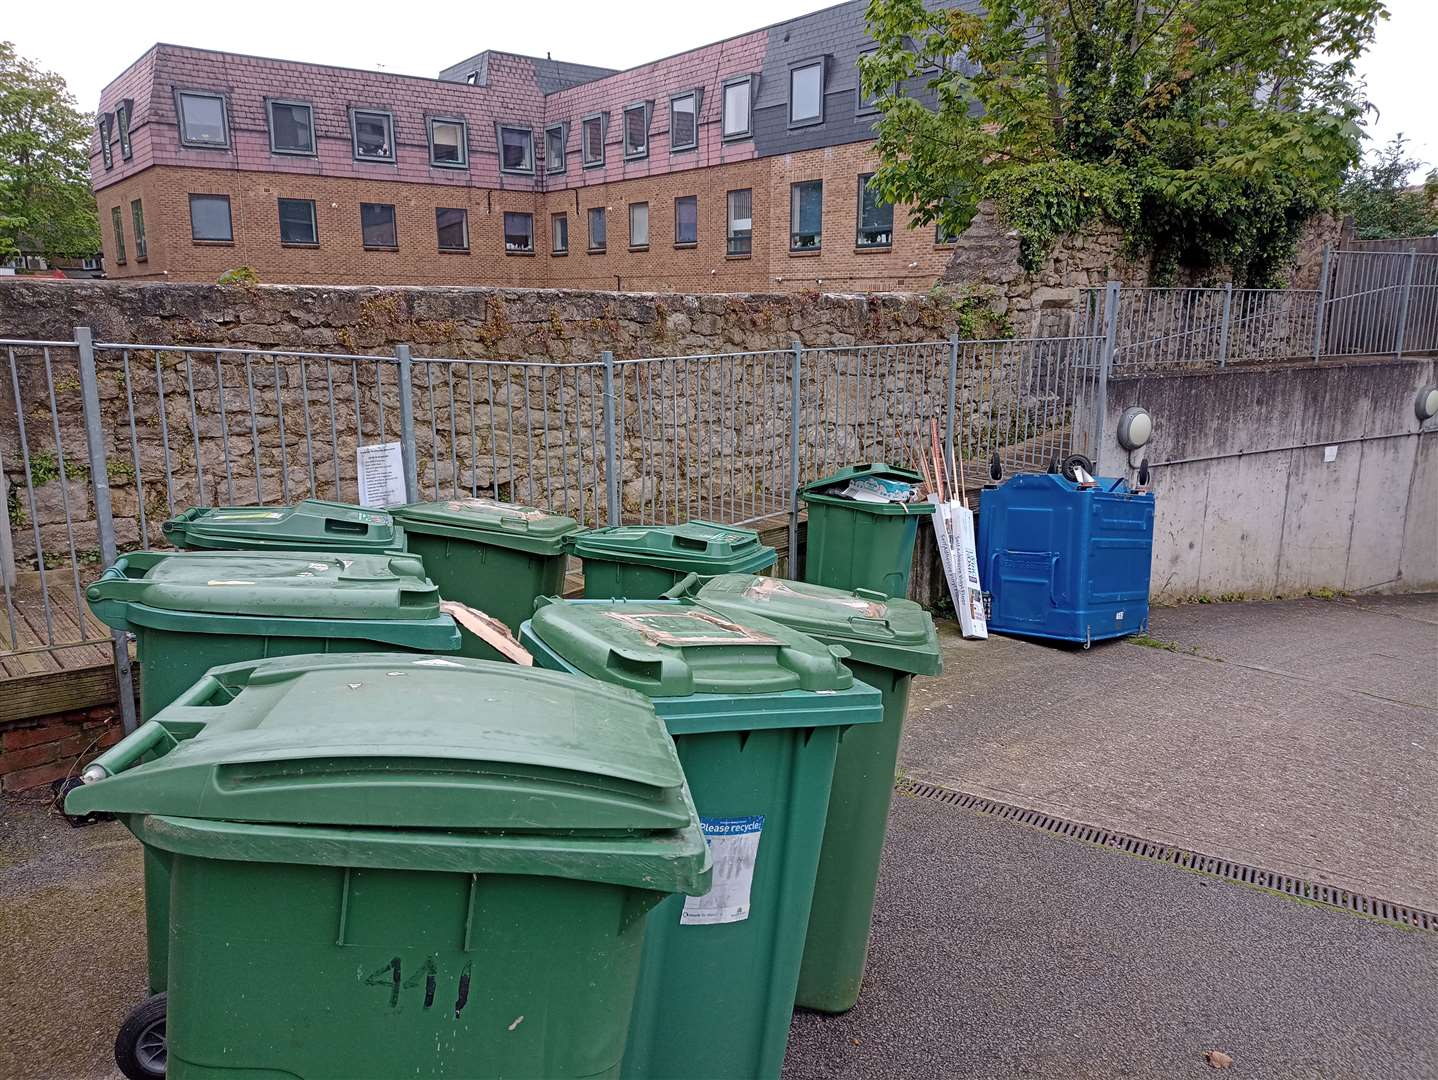 One green bin was left unemptied